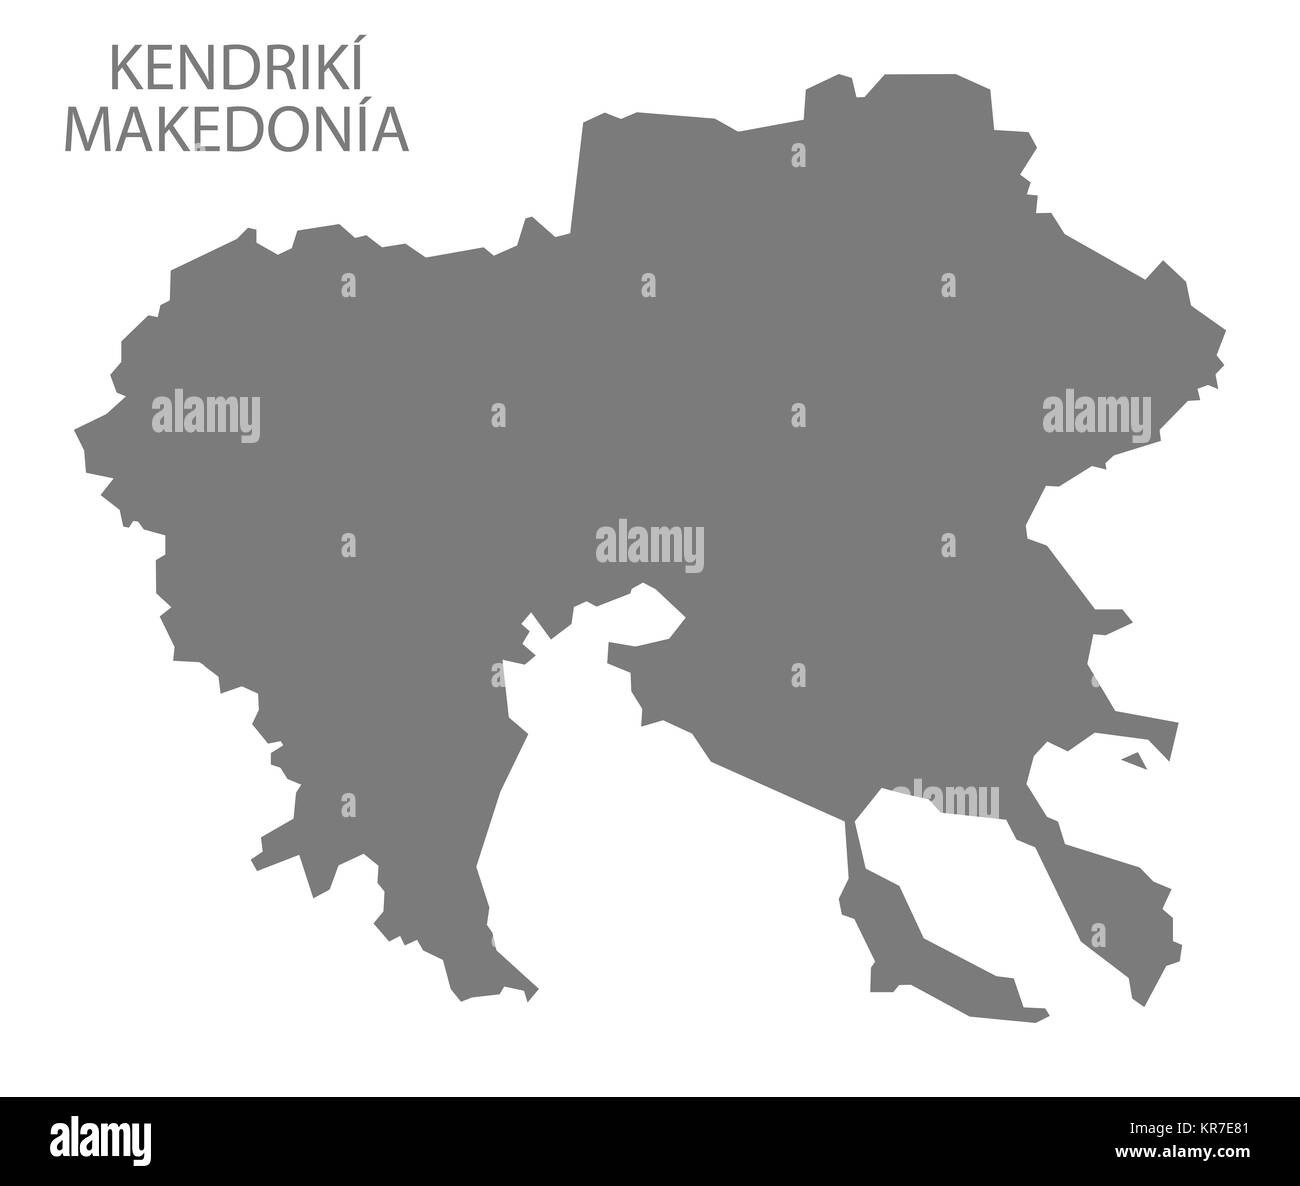 Kendriki Makedonia Greece Map grey Stock Photo